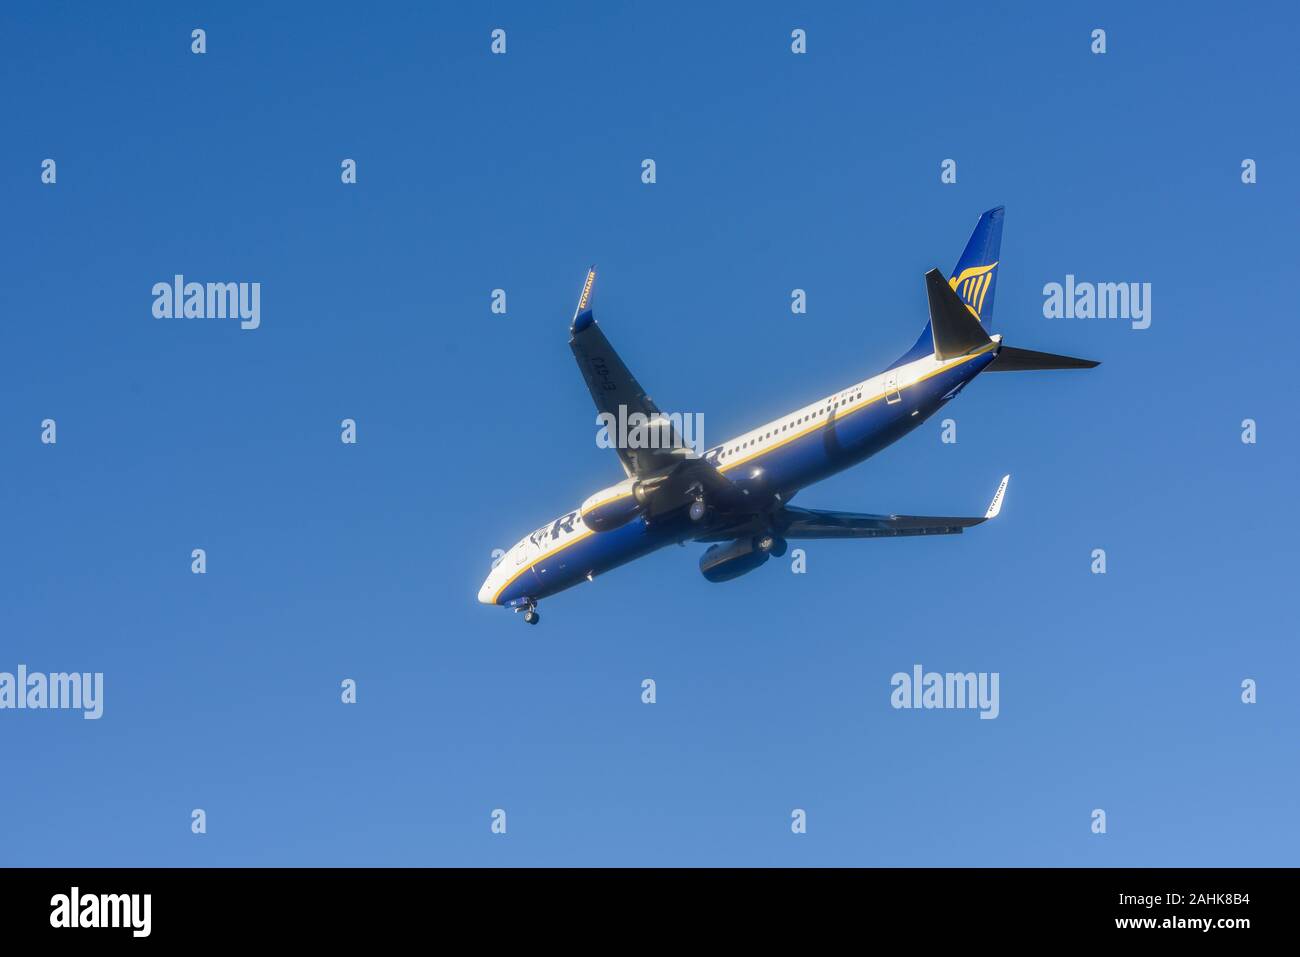 Ryanair Passenger Airline Prepares for Landing At East Midlands Airport, UK. Stock Photo